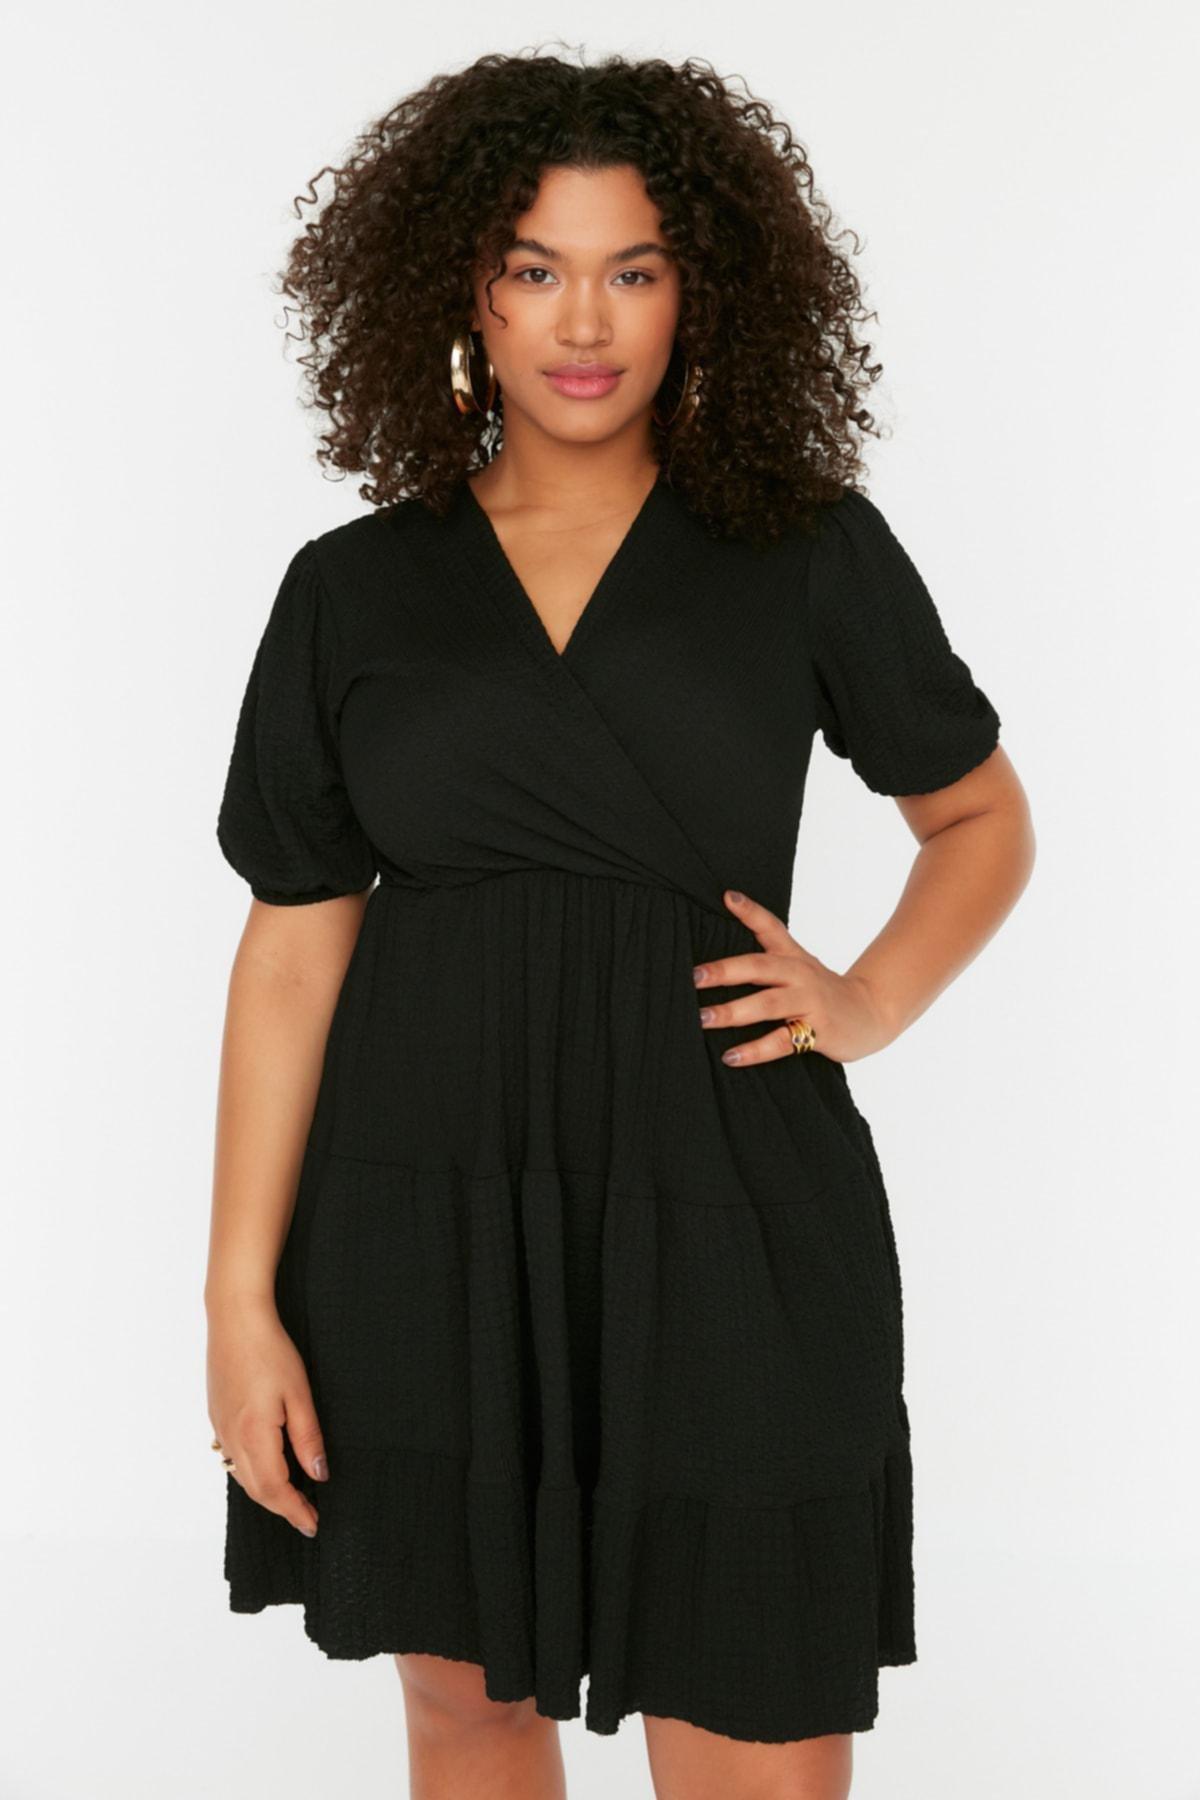 Trendyol - Black Wrapover Plus Size Dress